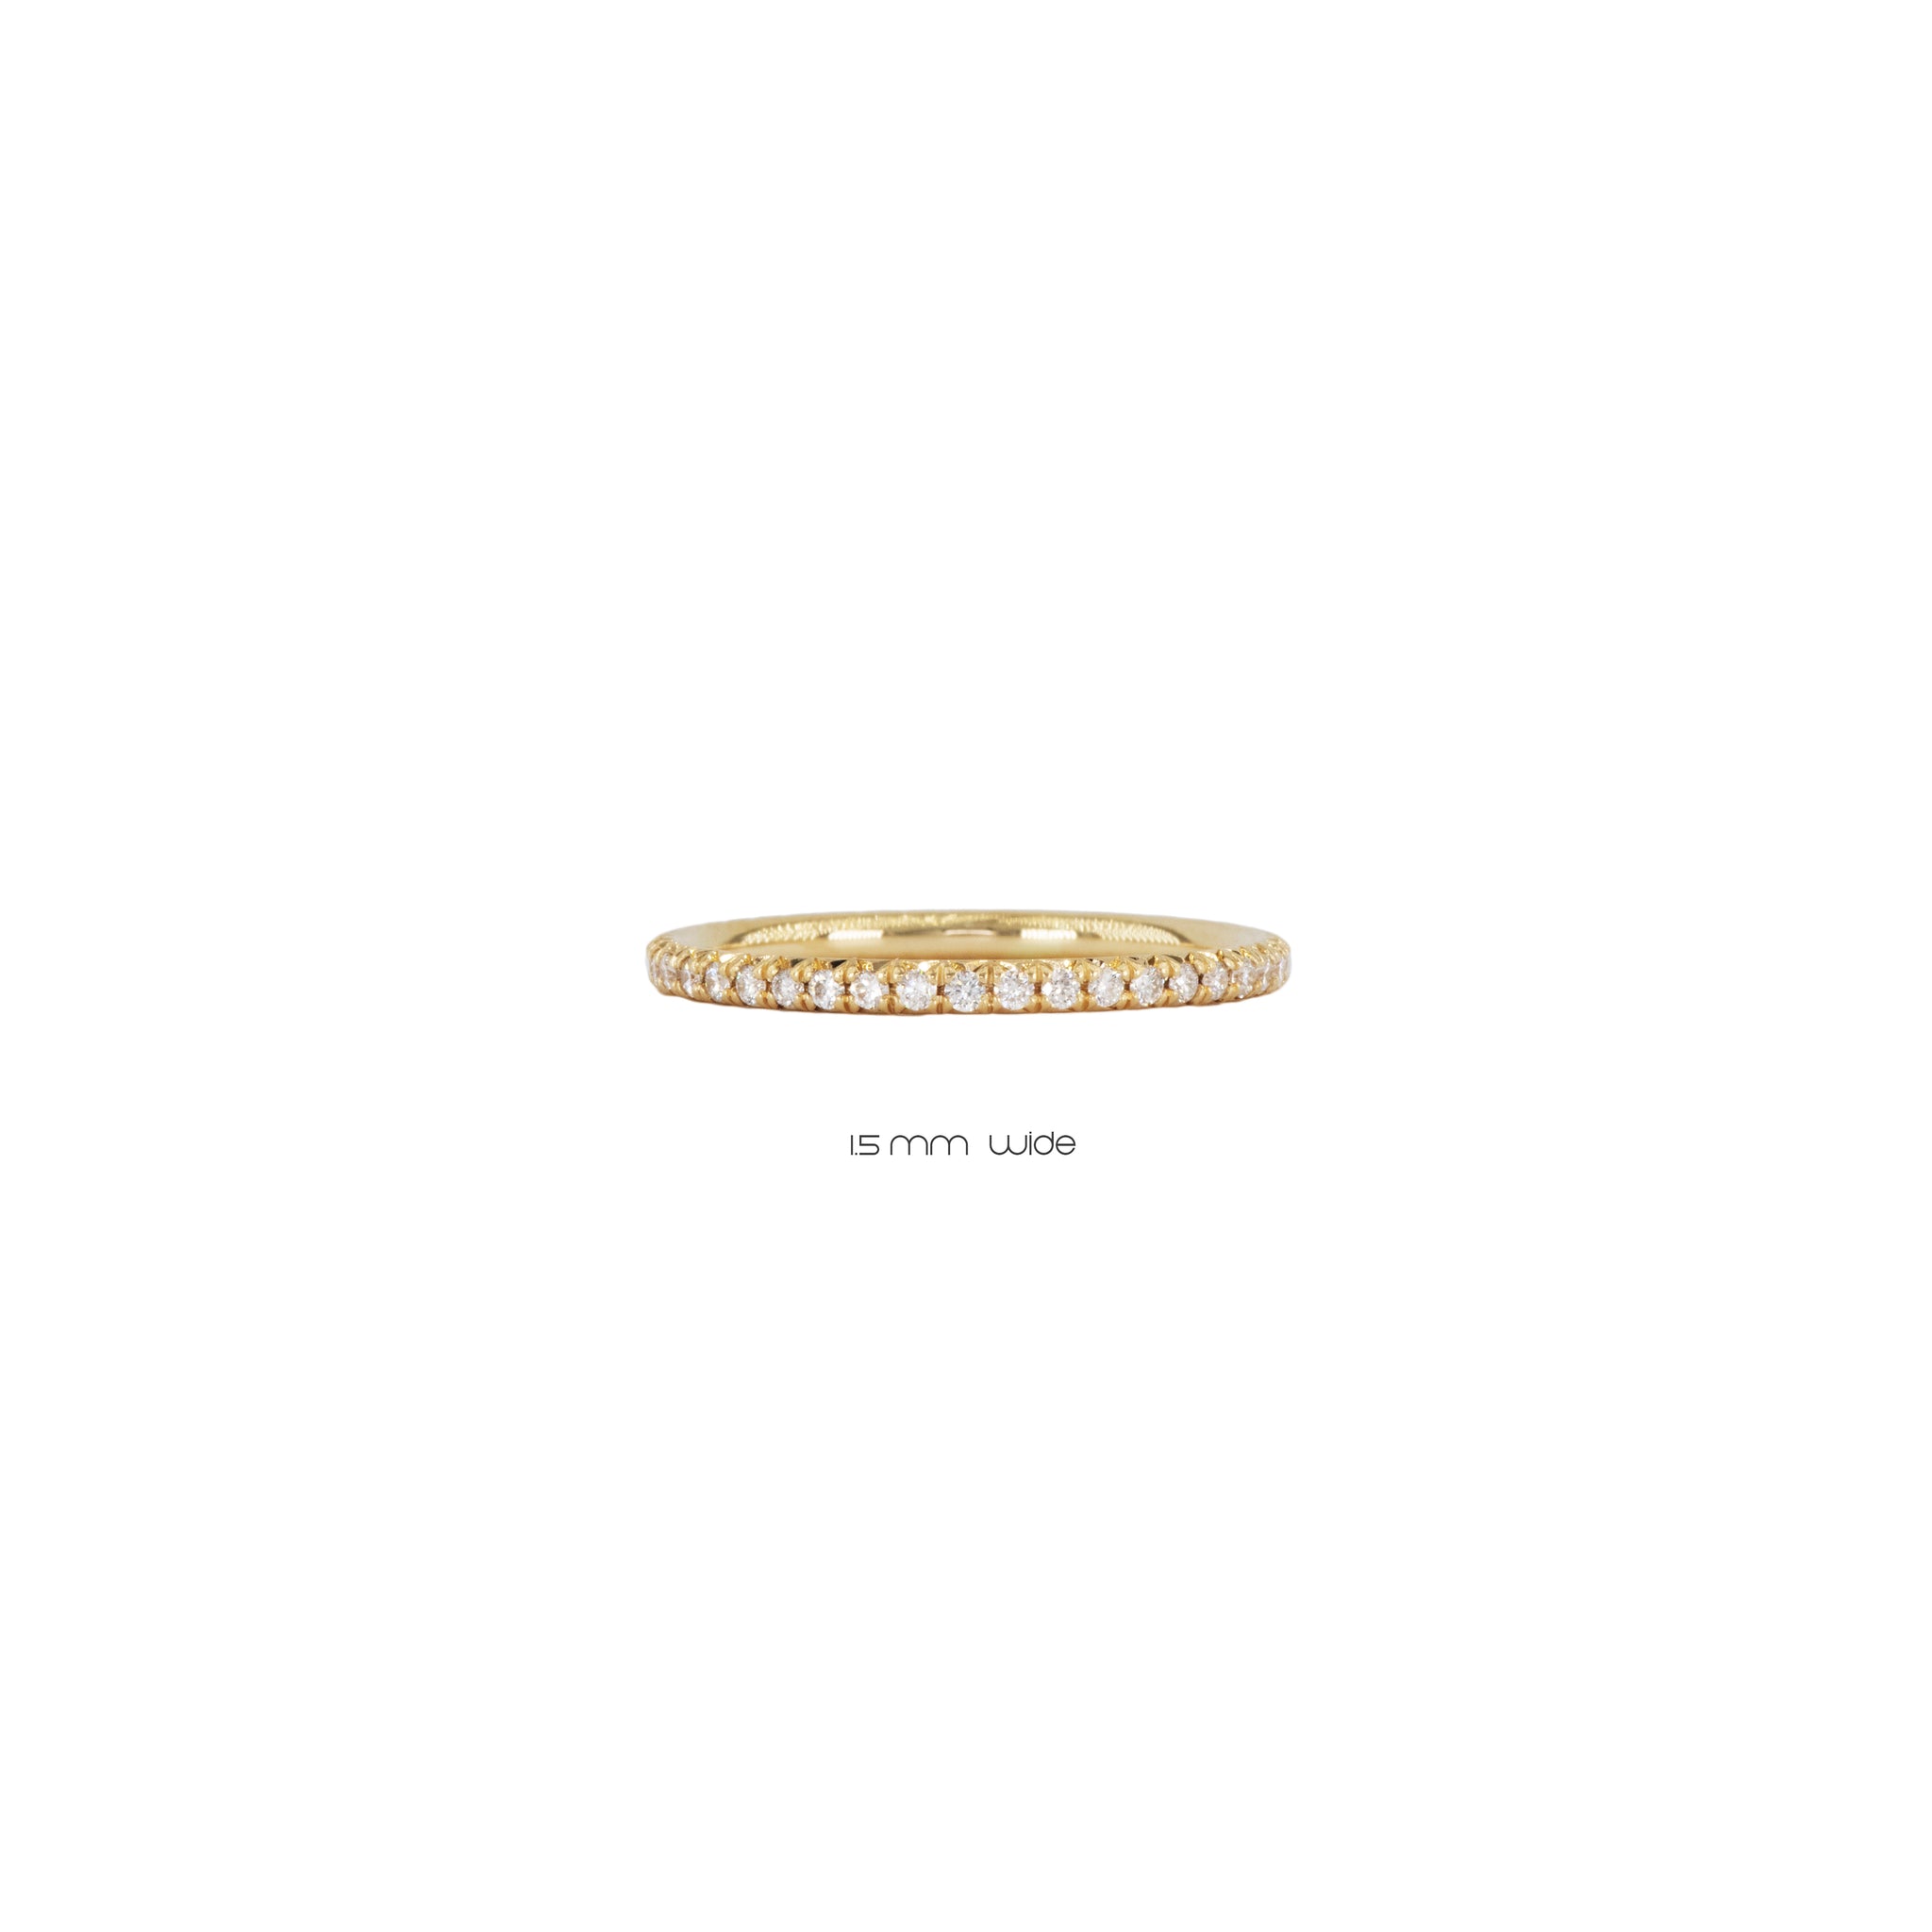 the petite ètoile d'or eternity ring